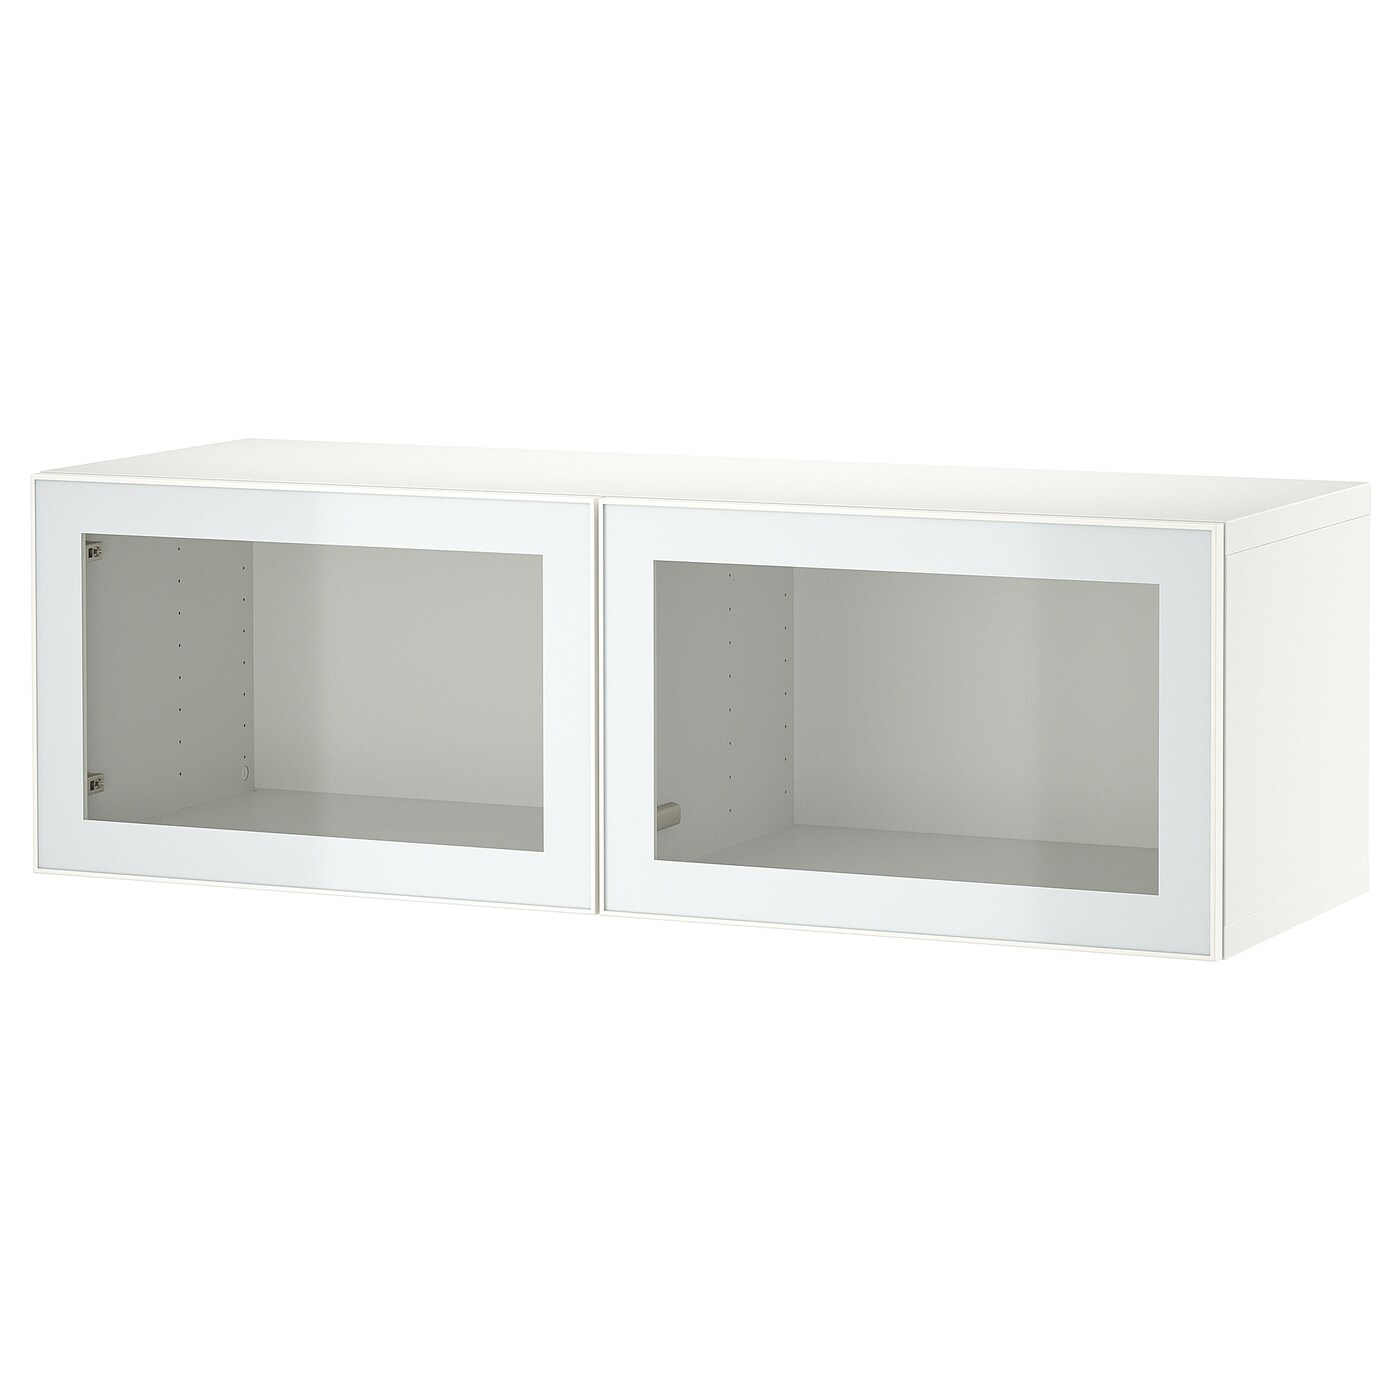 Навесной шкаф - IKEA BESTÅ/BESTA, 120x42x38 см, белый, БЕСТО ИКЕА